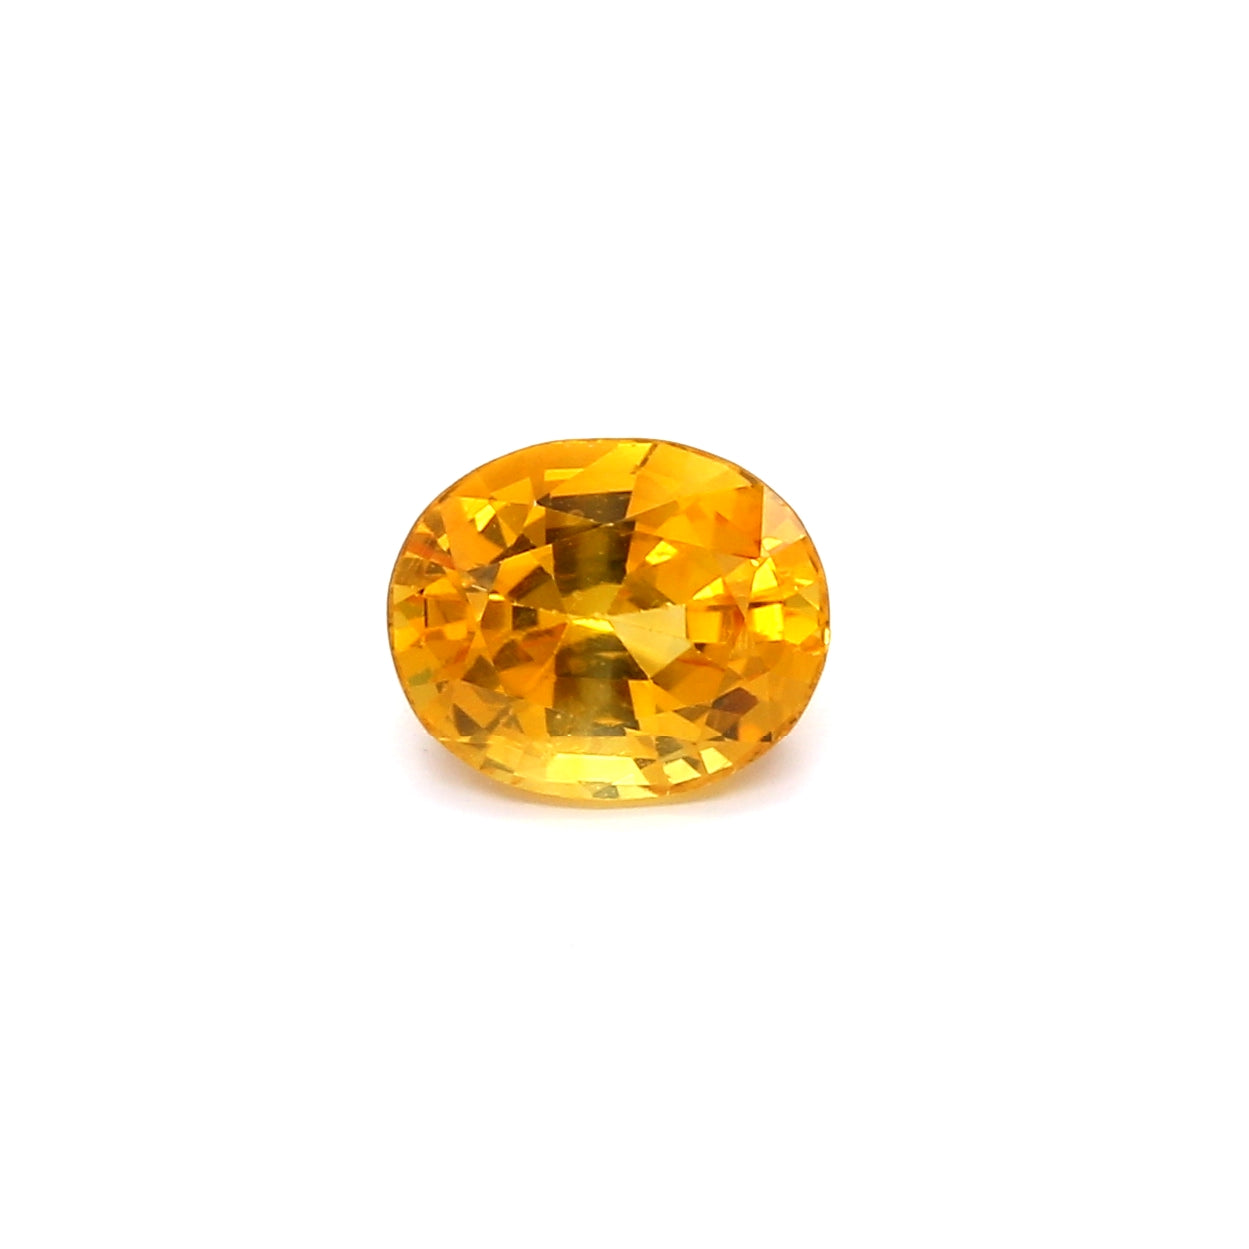 1.80ct Yellow, Oval Sapphire, Heated, Sri Lanka - 7.67 x 6.40 x 4.47mm